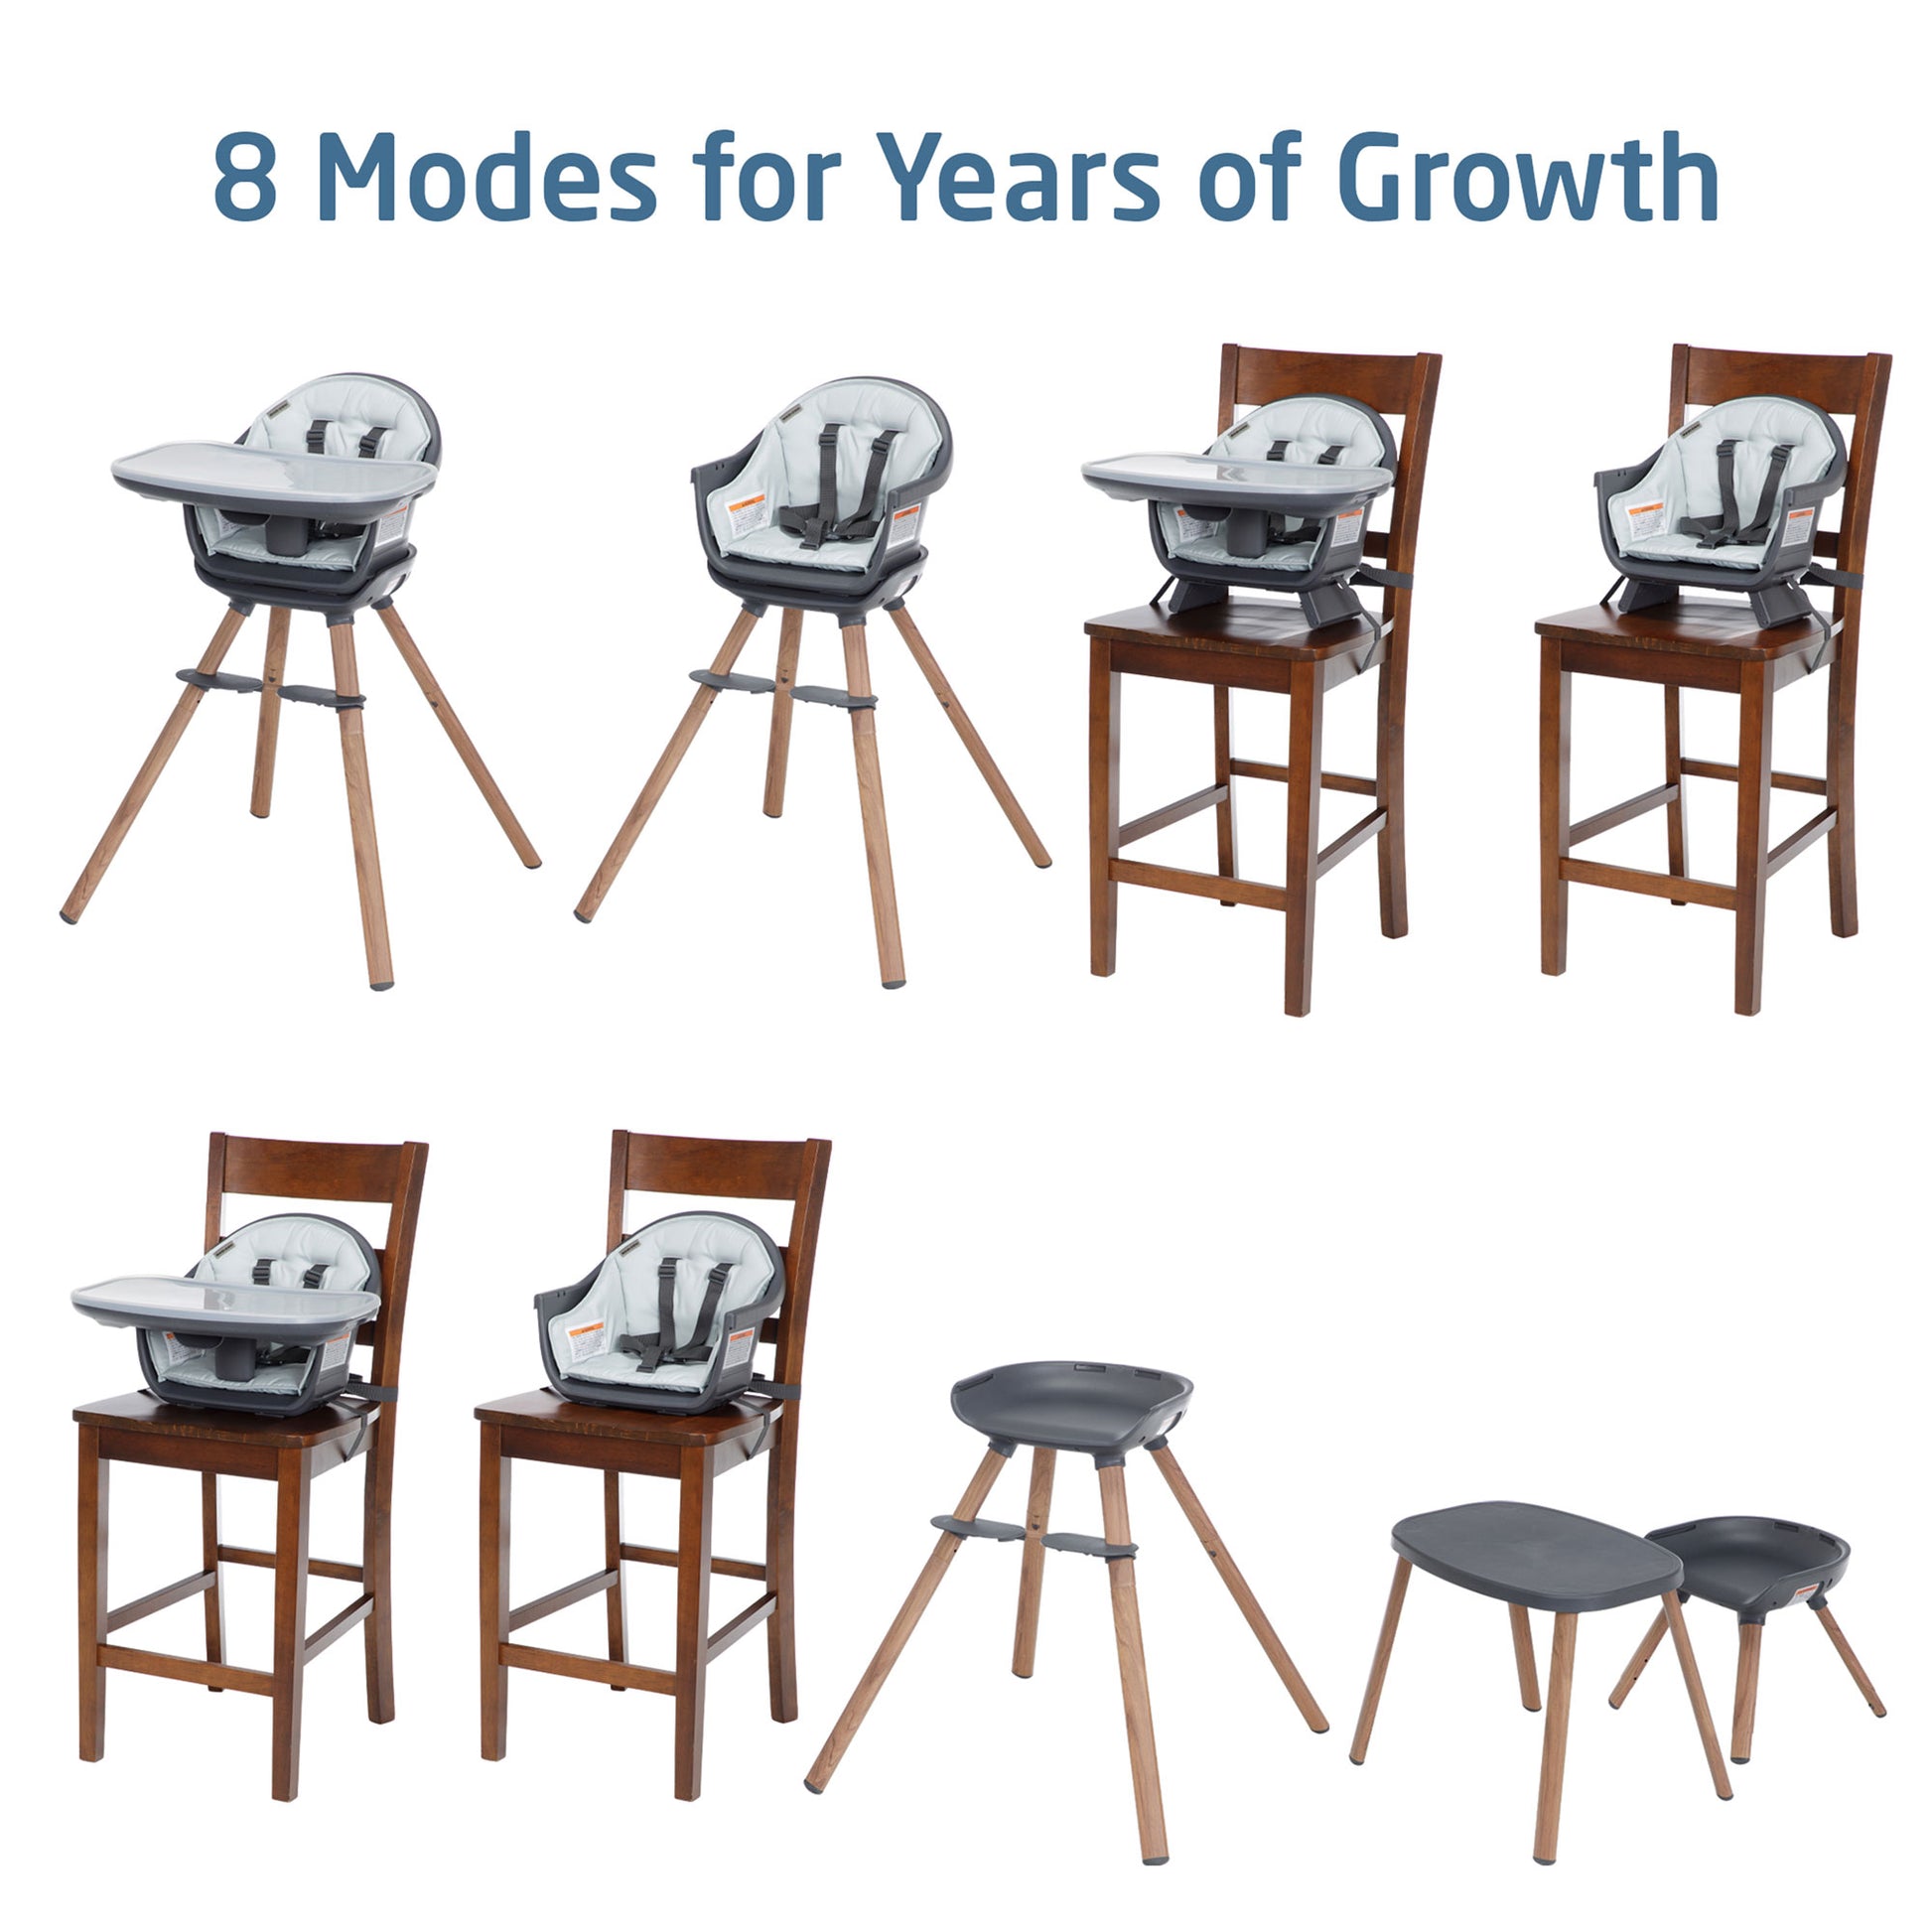 Maxi-Cosi Moa 8-in-1 High Chair - Essential Graphite